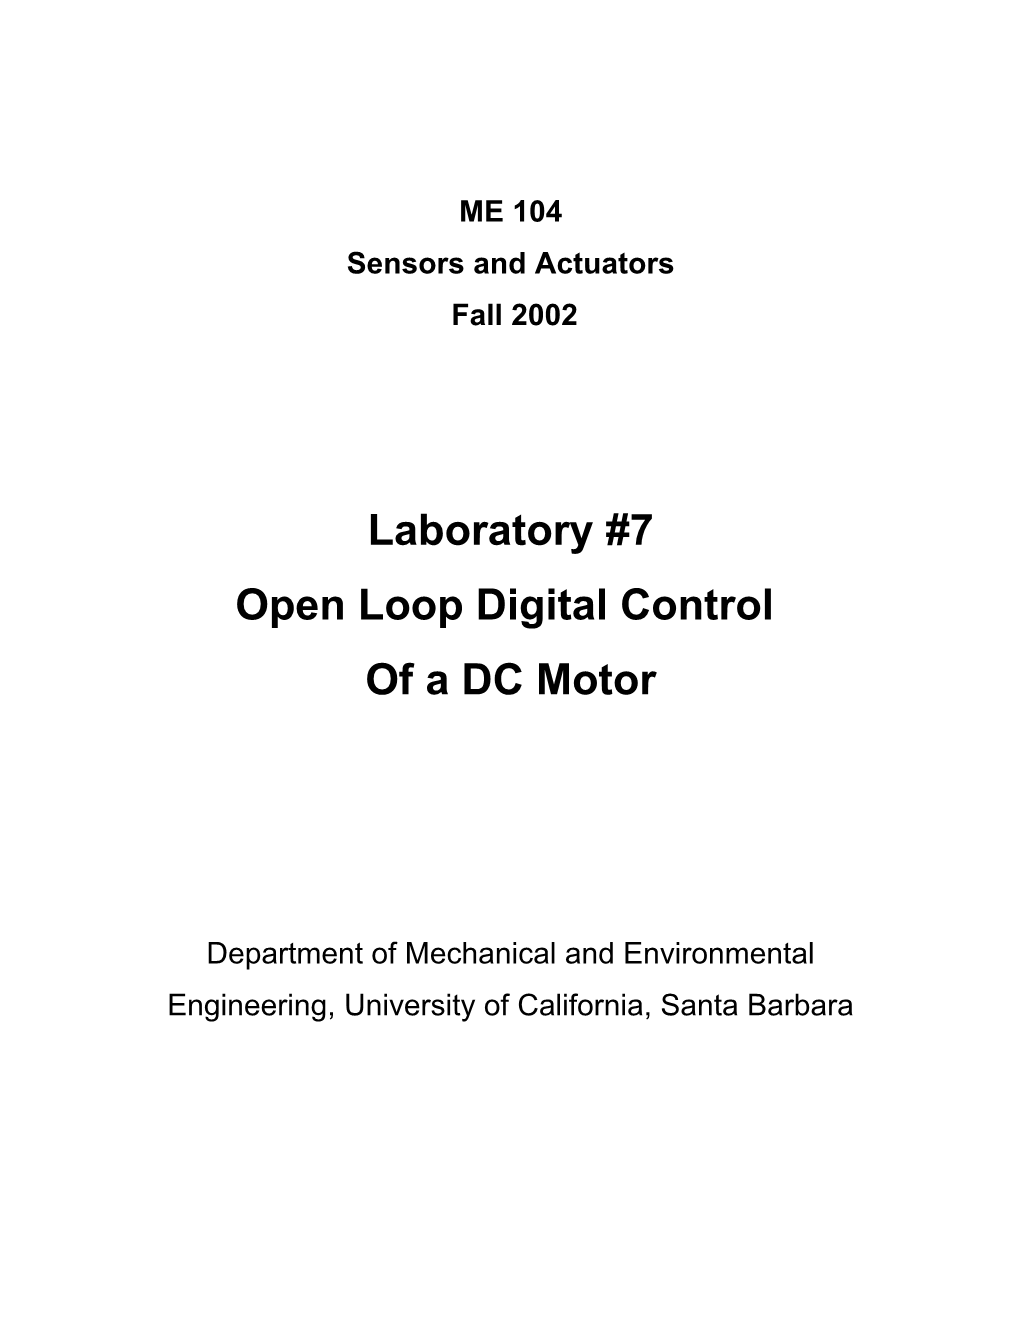 Open Loop Digital Control